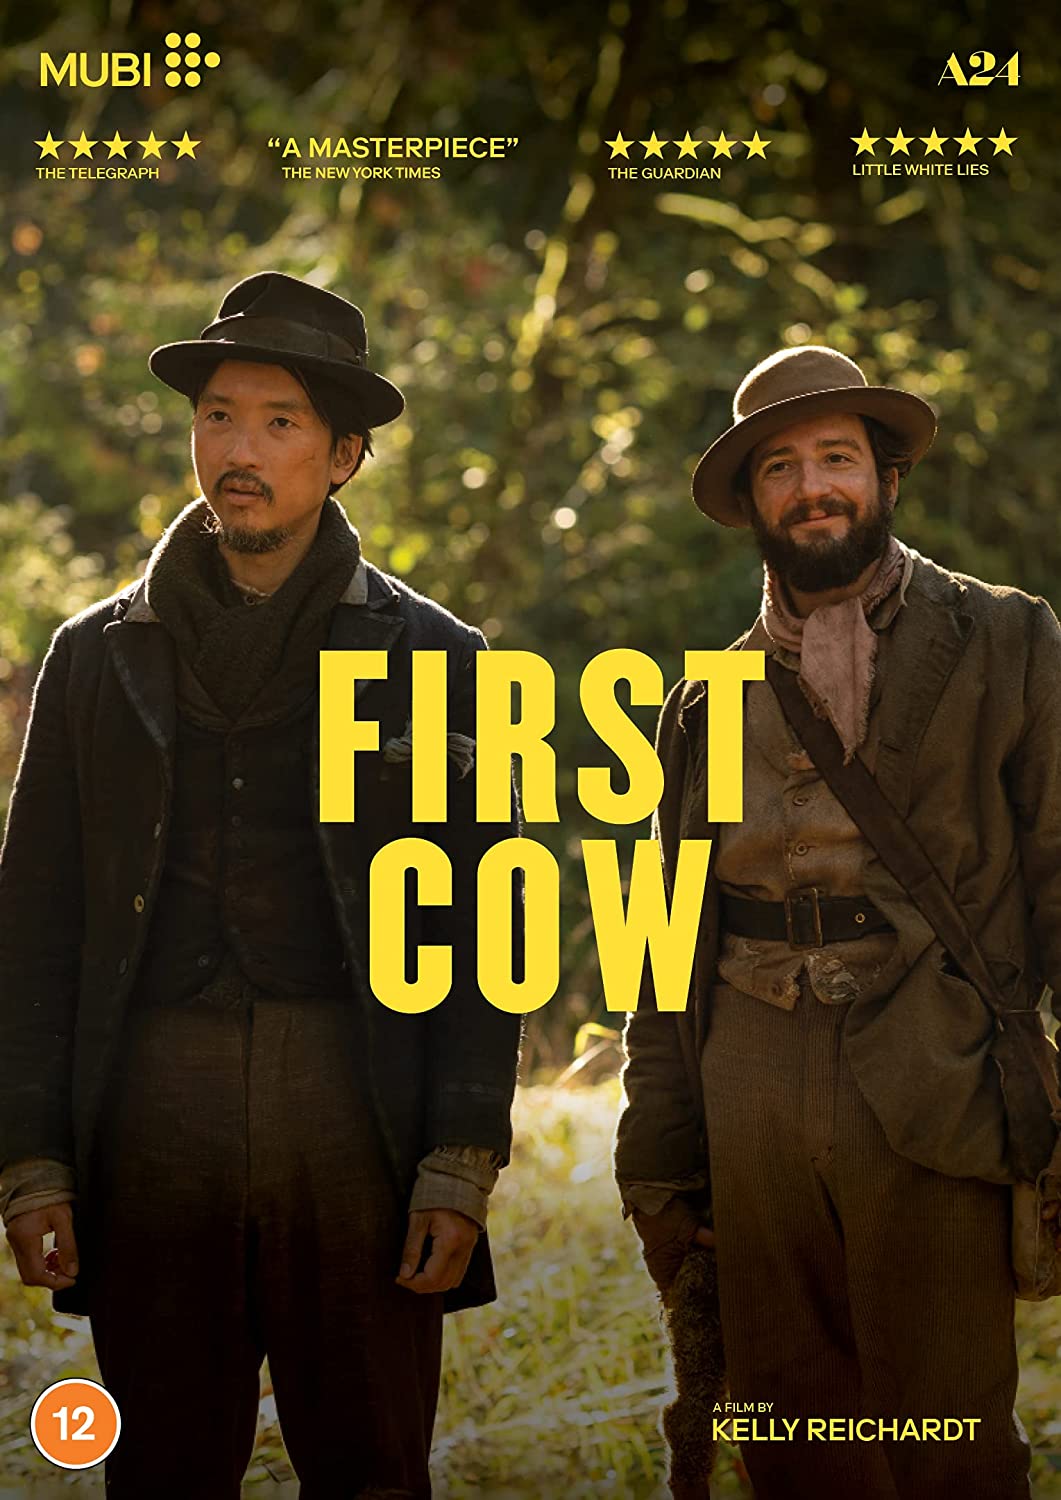 First Cow - Drama/Western [DVD]